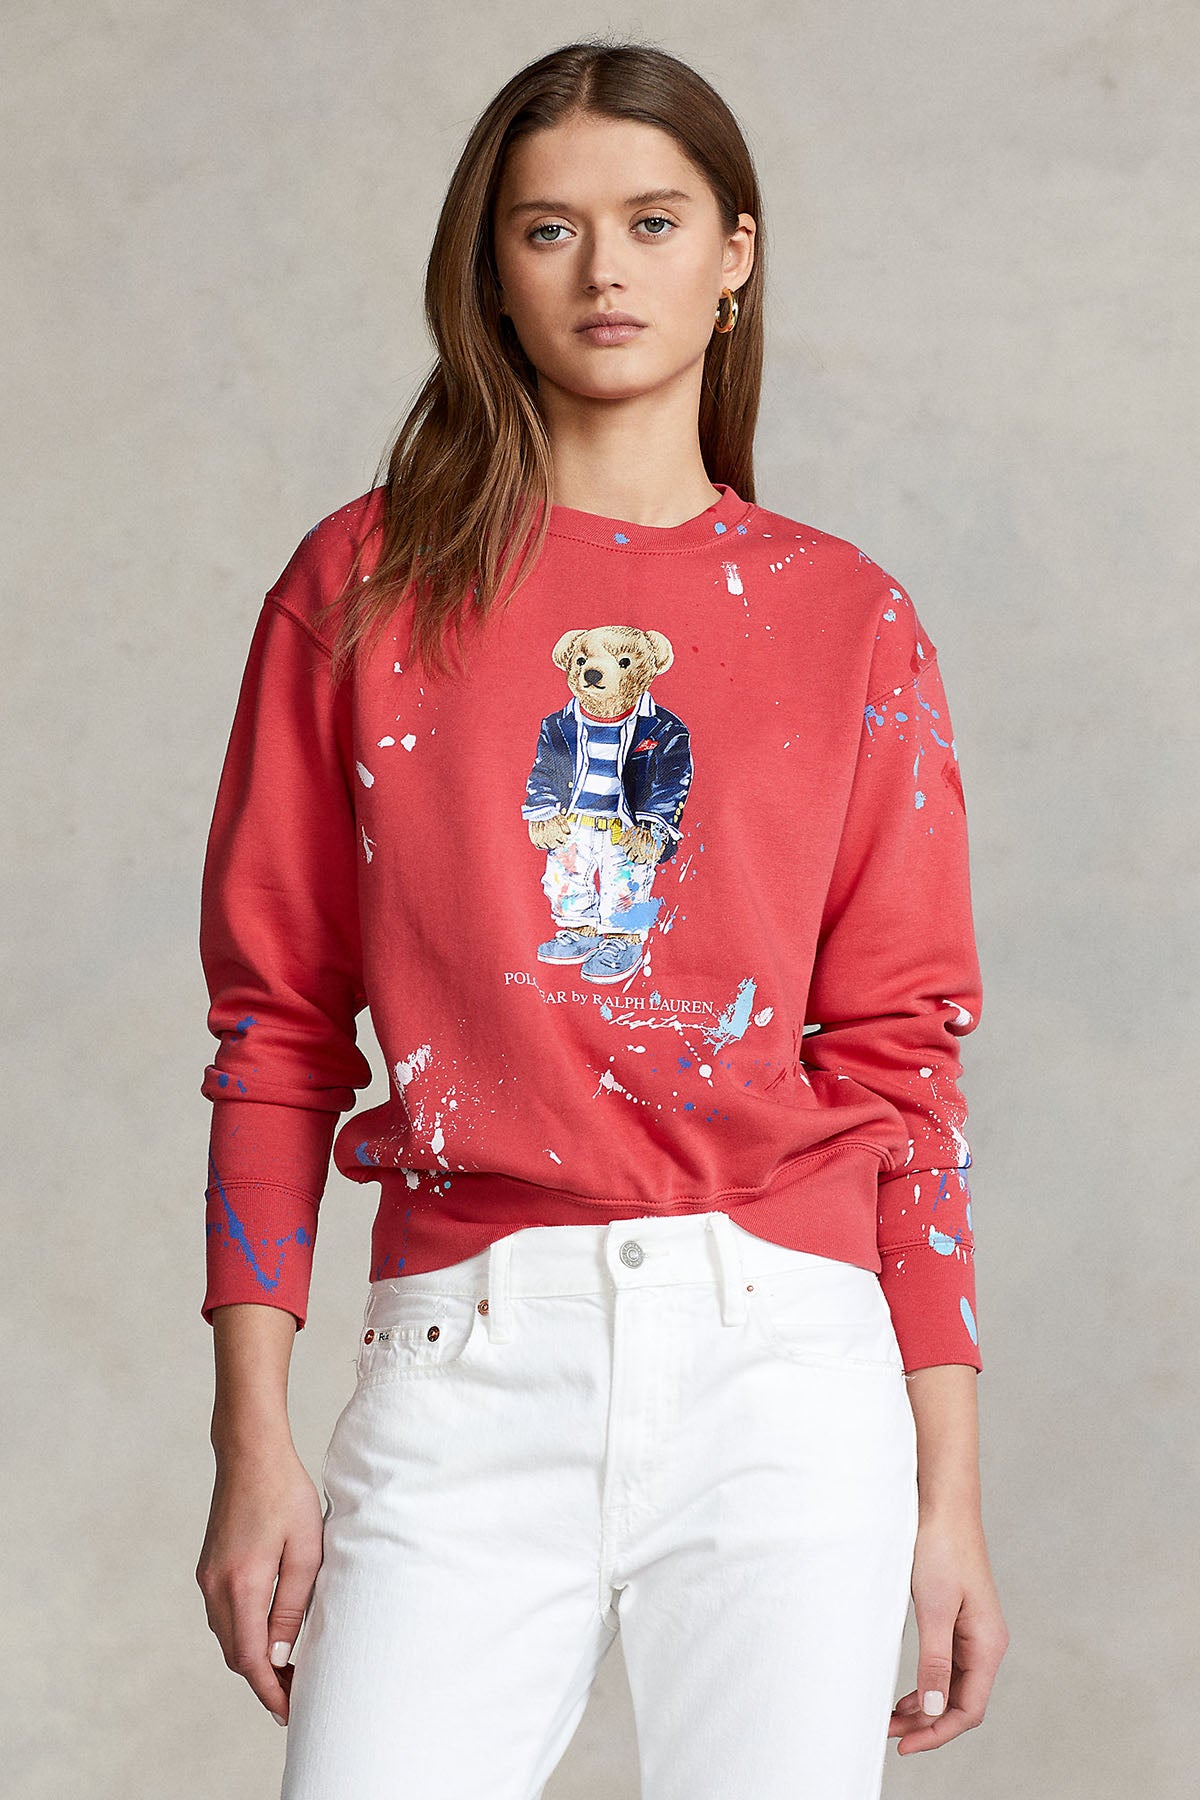 Polo Ralph Lauren Boya Efektli Polo Bear Sweatshirt-Libas Trendy Fashion Store